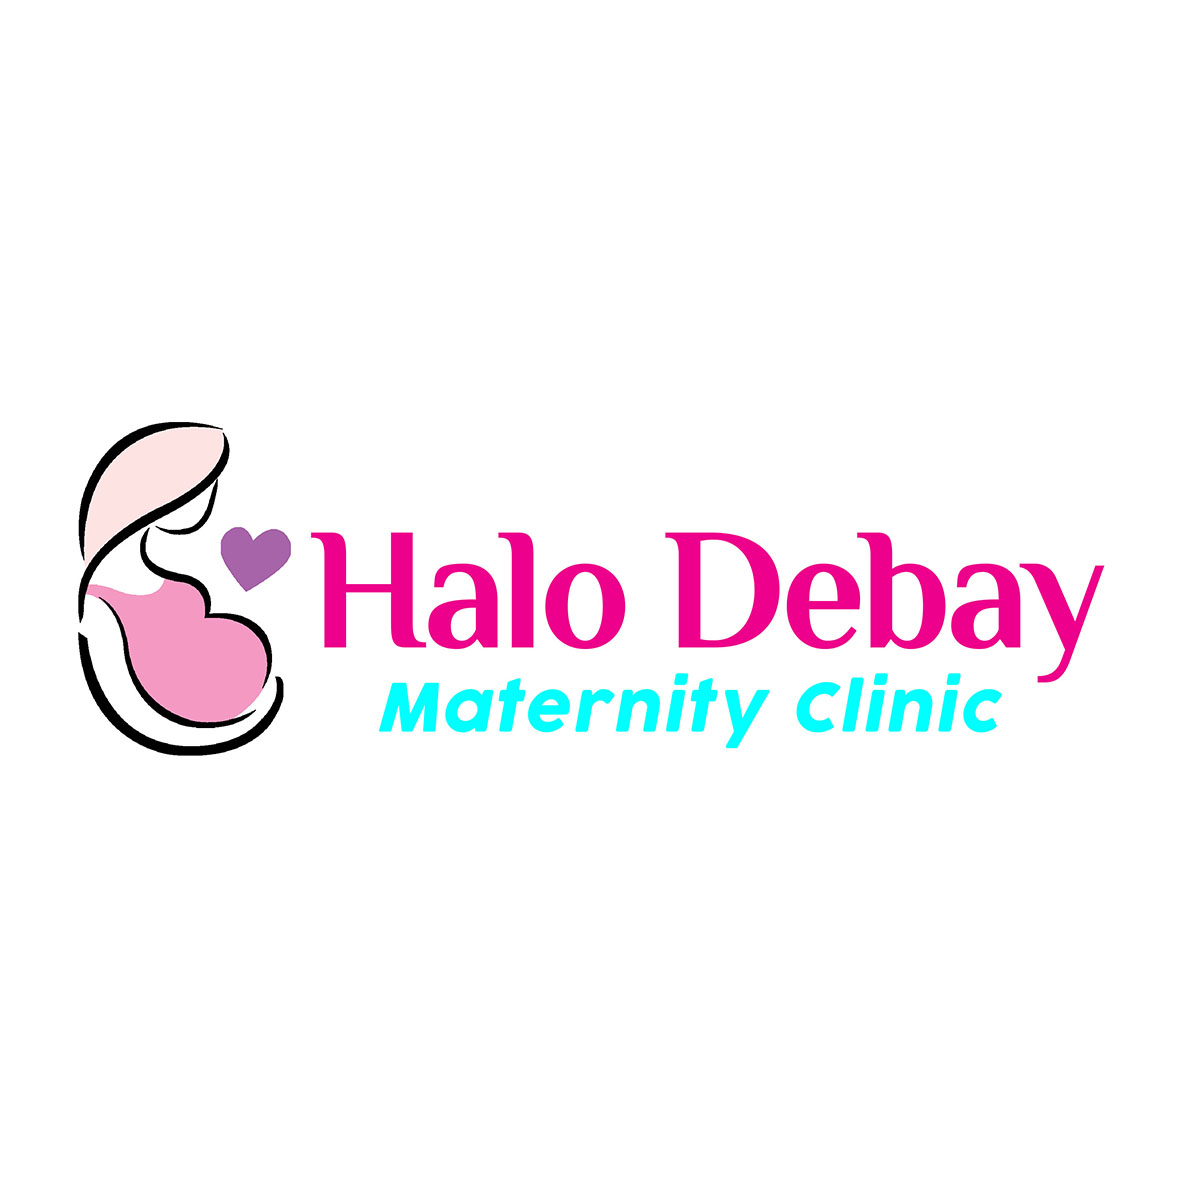 Halo Debay Maternity Care